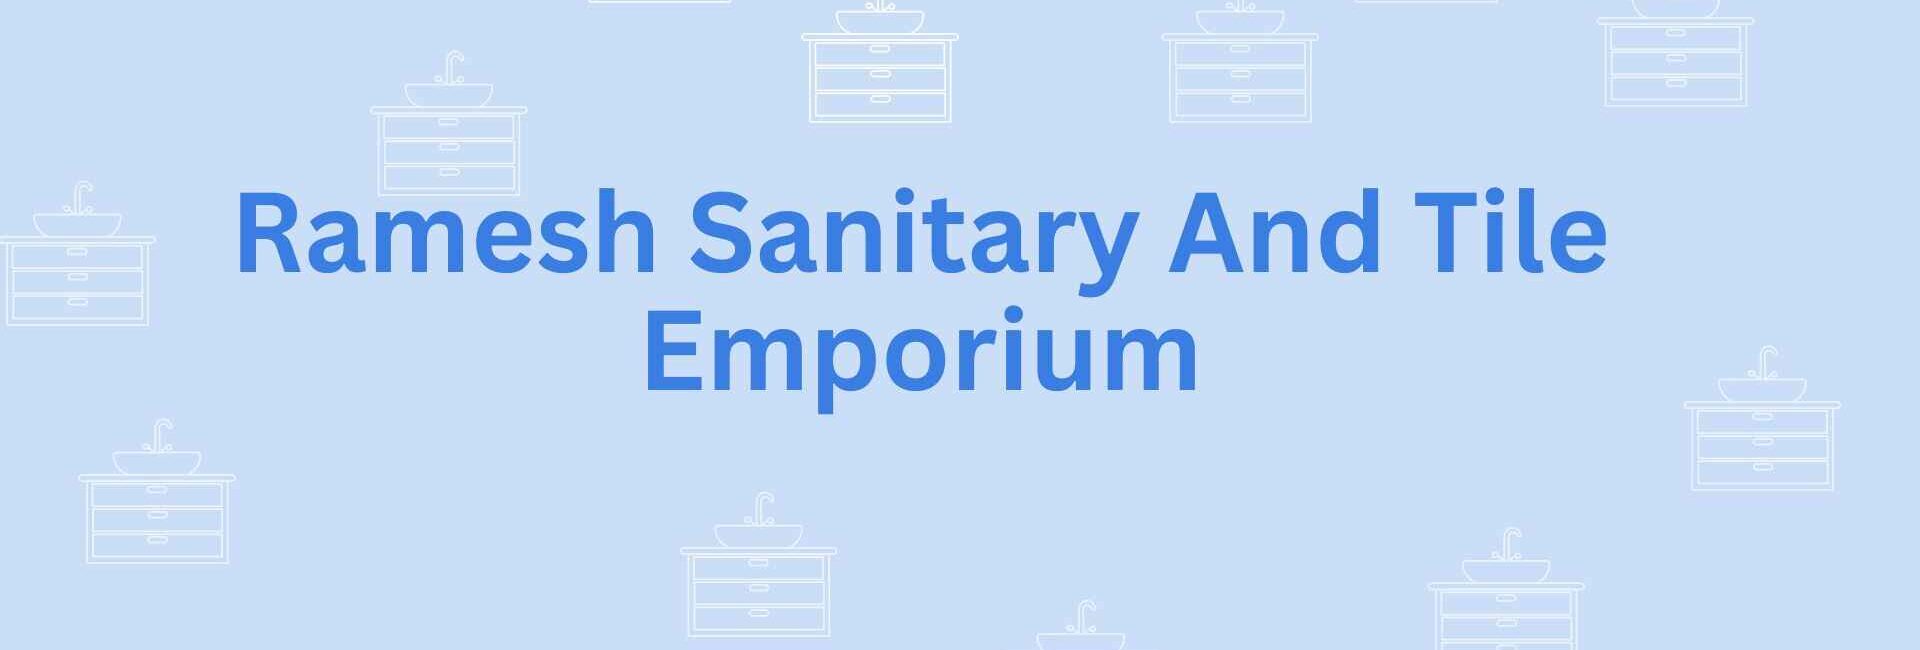 Ramesh Sanitary And Tile Emporium-Sanitary service company in Noida